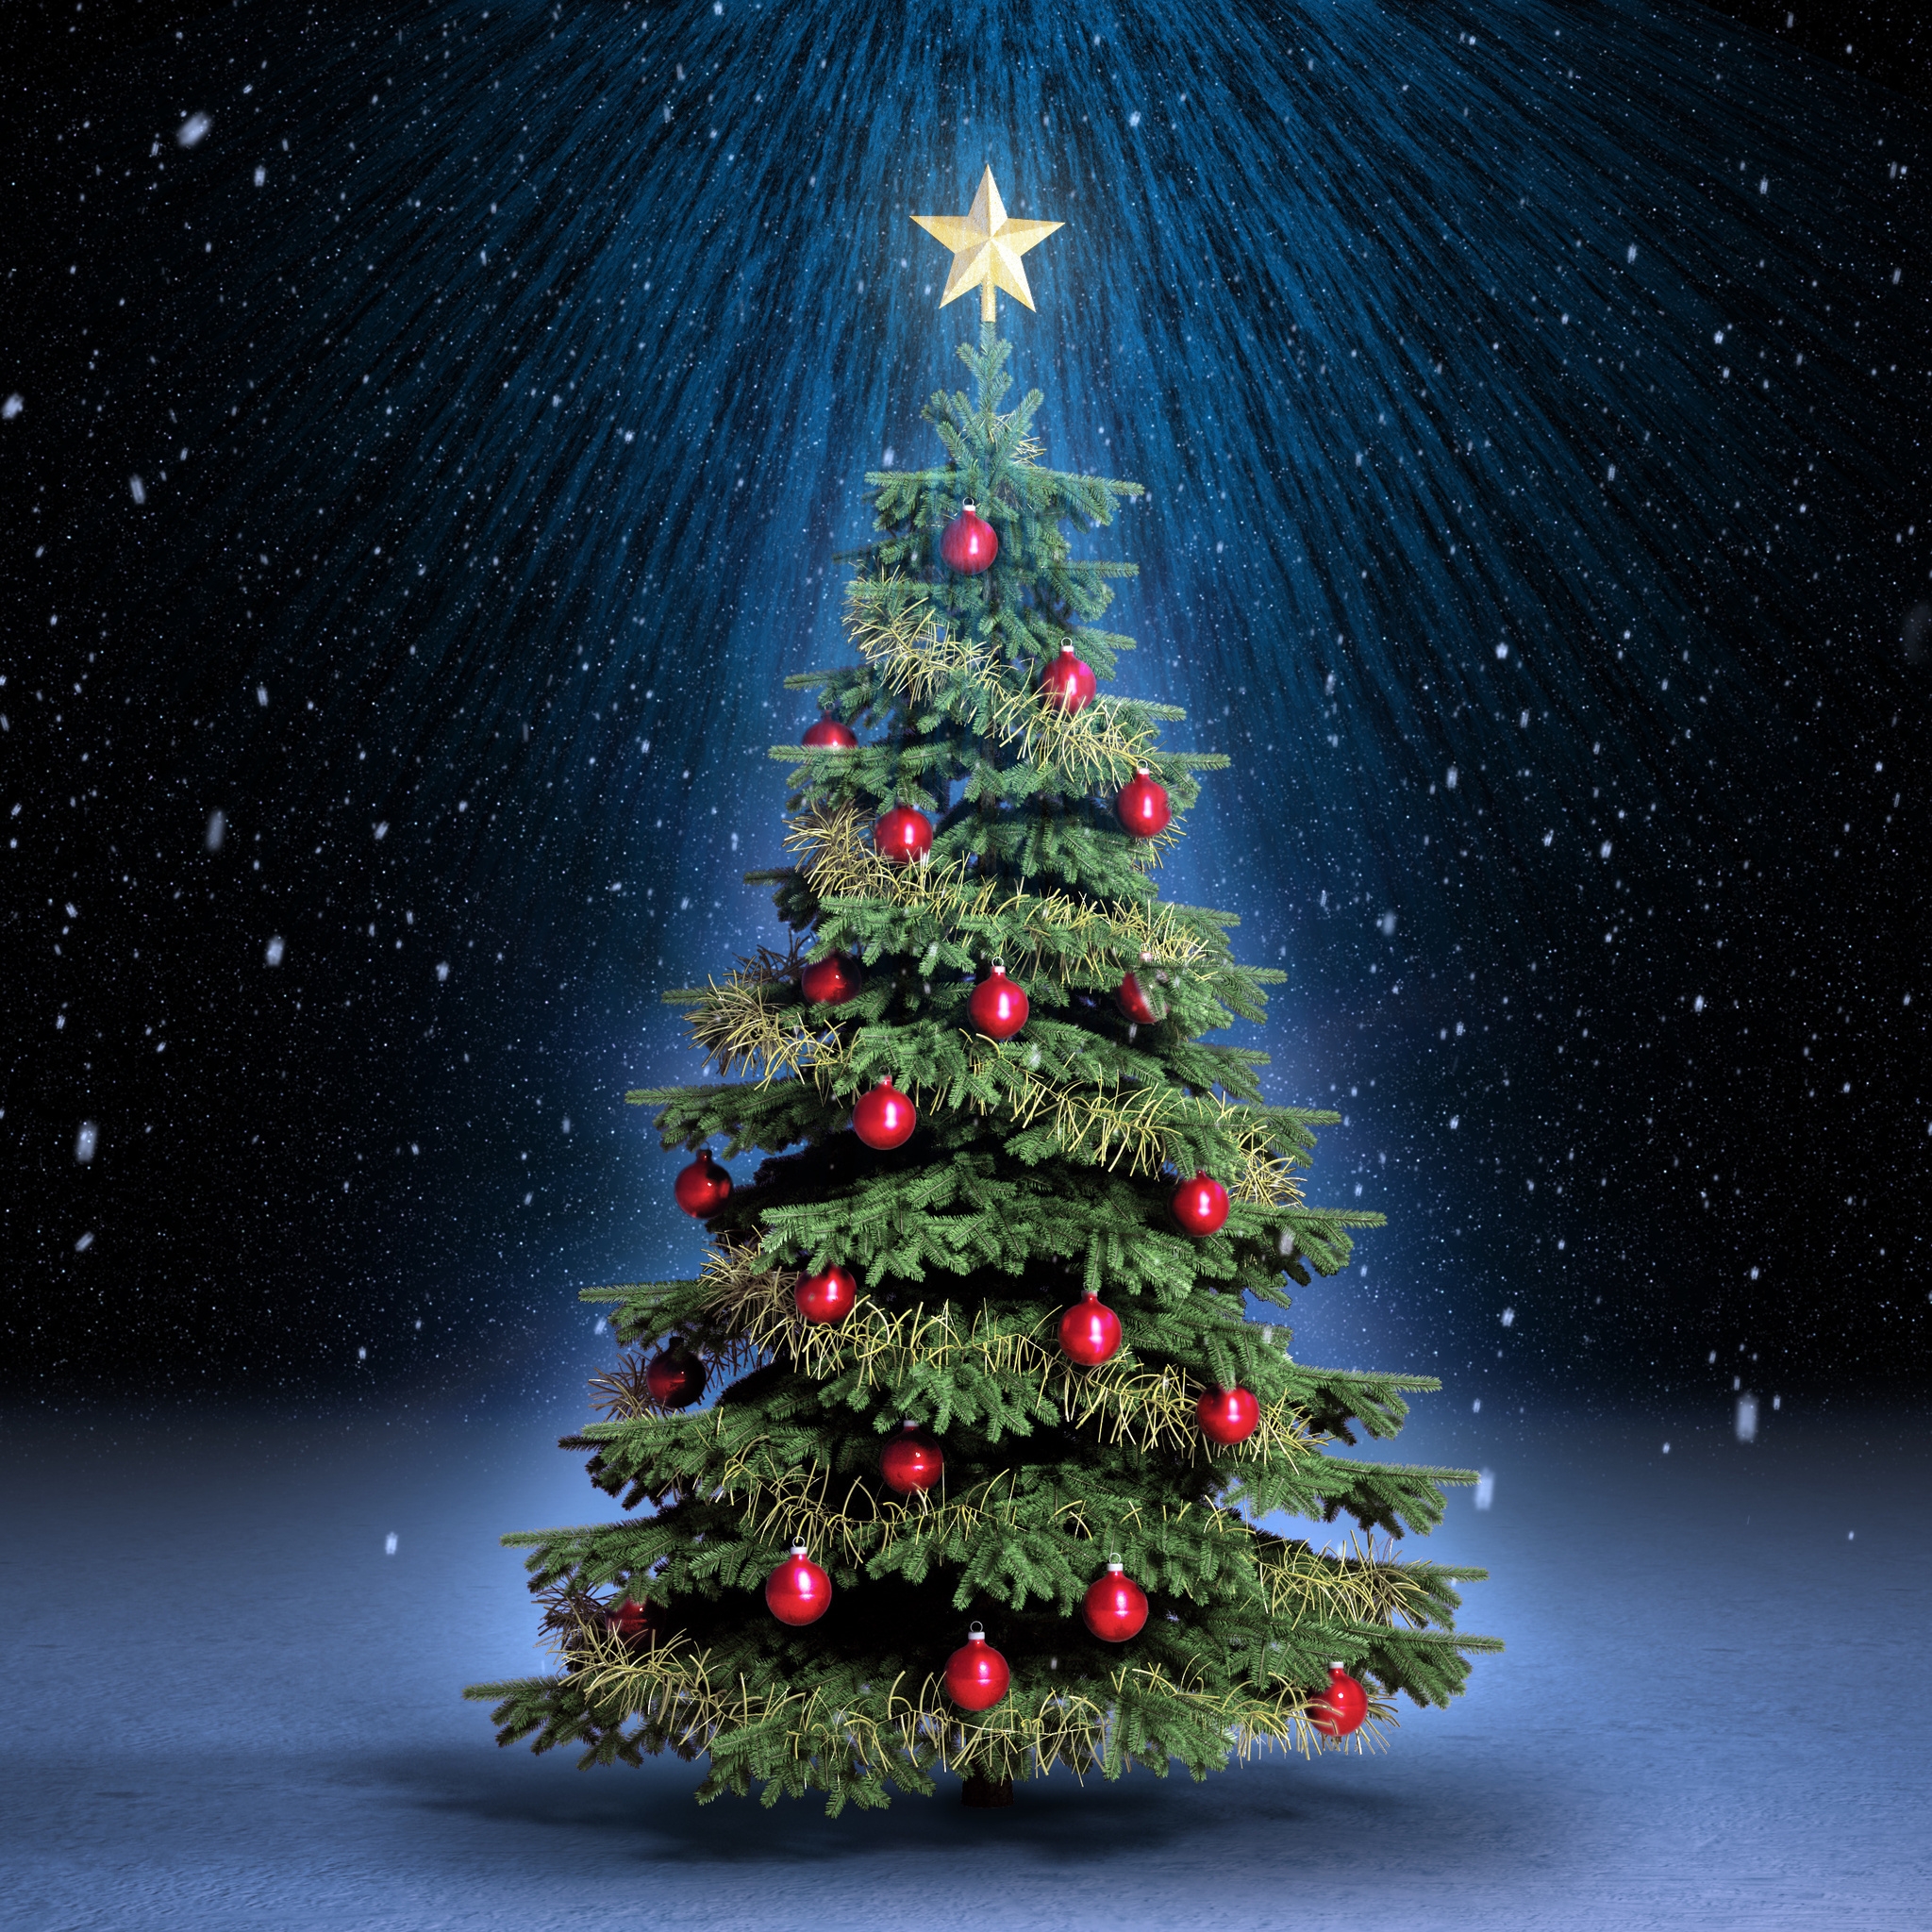 Cute Christmas Tree for 2048 x 2048 New iPad resolution